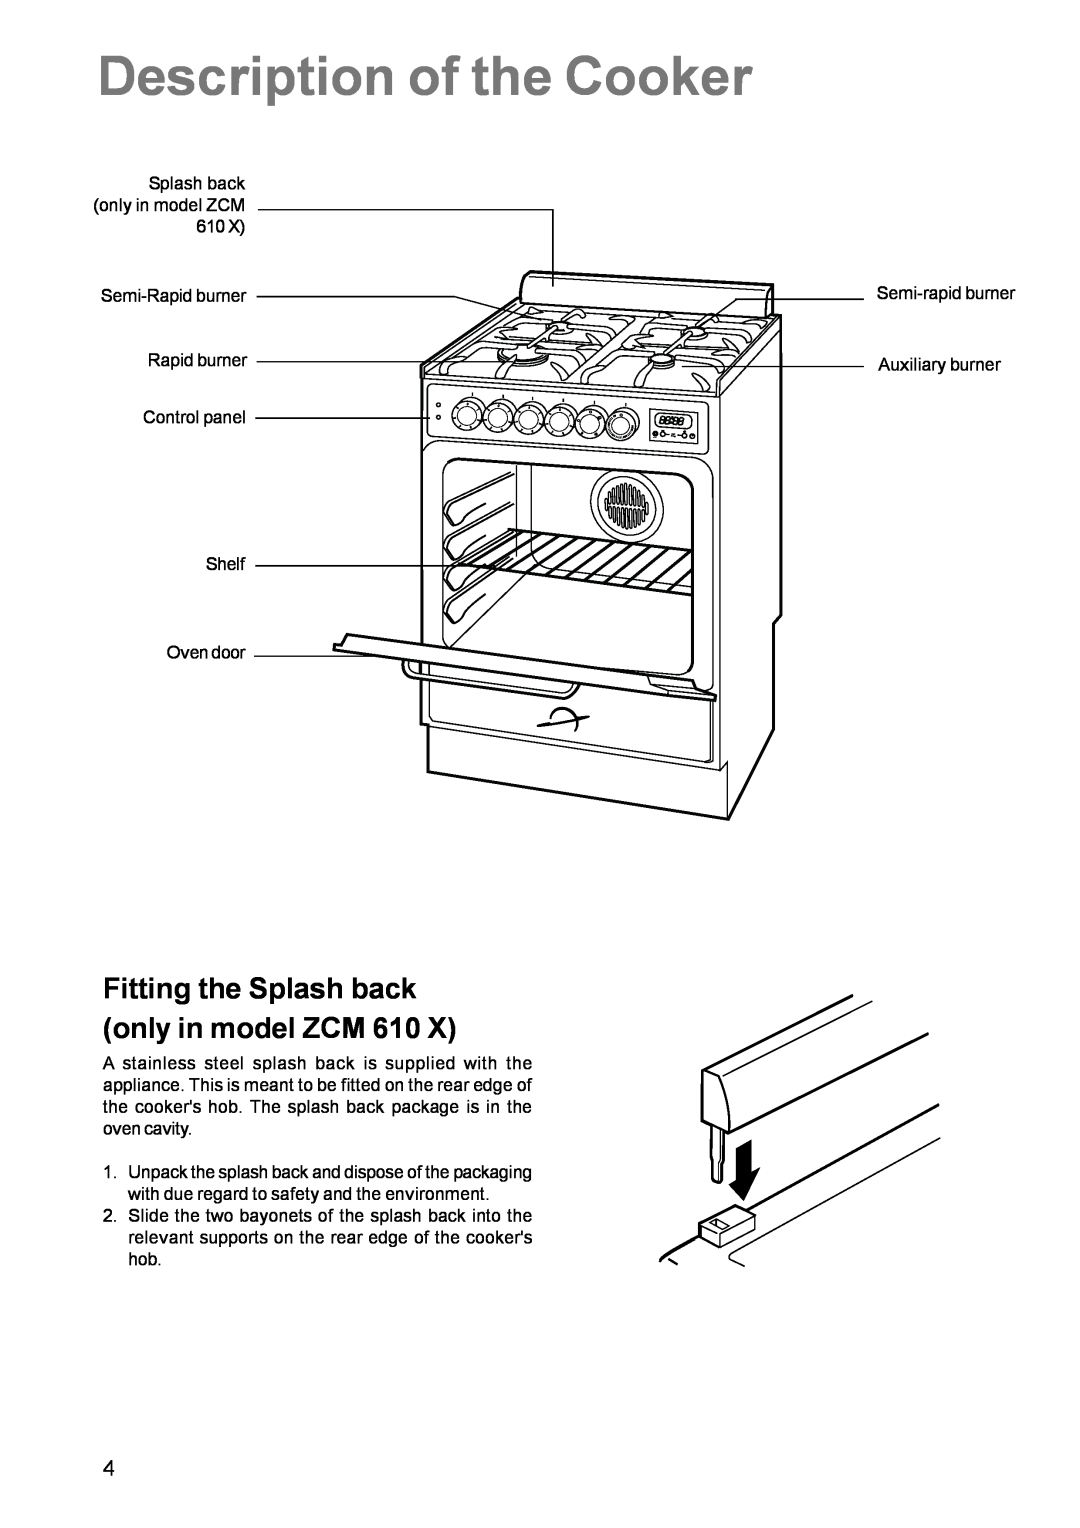 Zanussi ZCM 600 manual Description of the Cooker, Fitting the Splash back only in model ZCM 610 